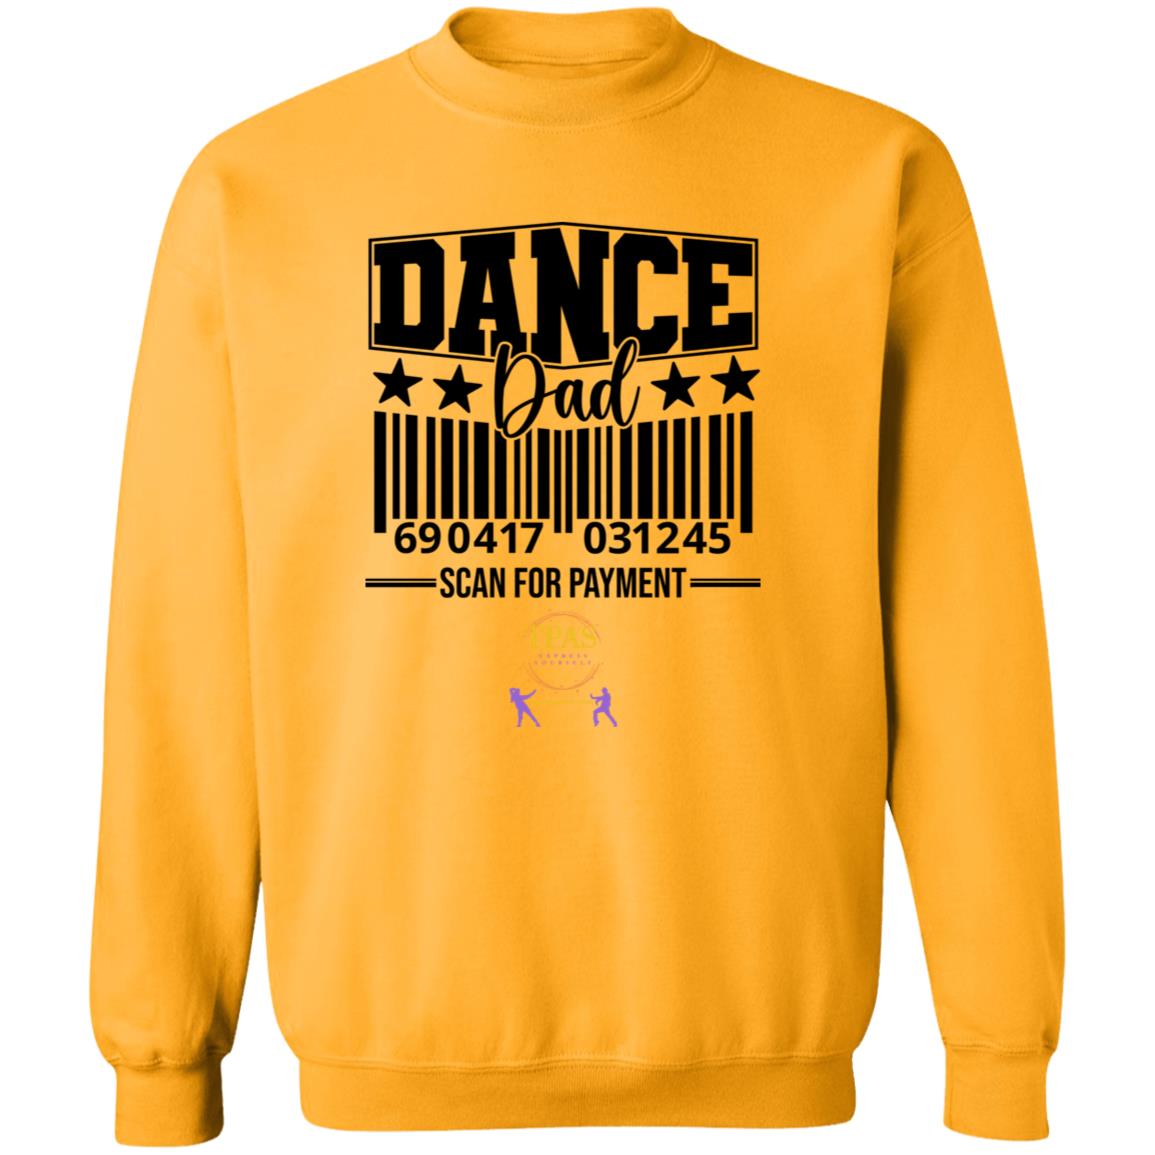 TPAS Dance Dad Scan for Payment Crewneck Pullover Sweatshirt